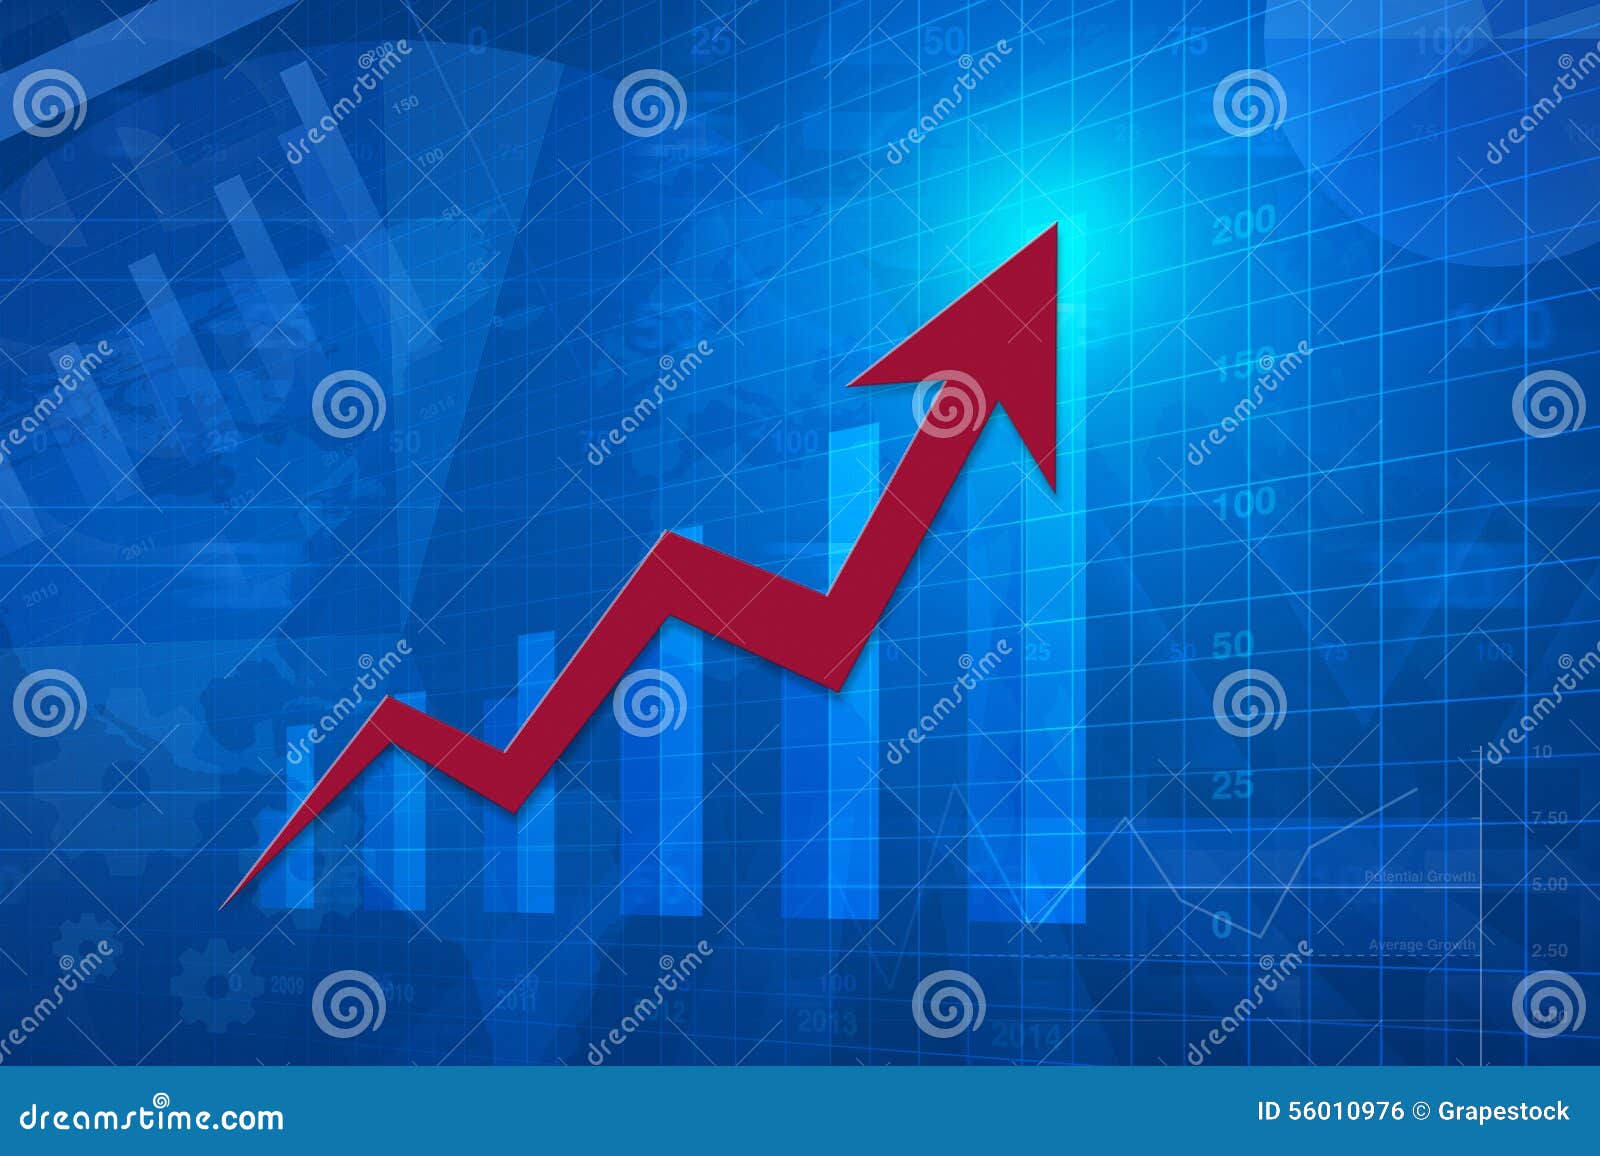 Nasa Stock Chart